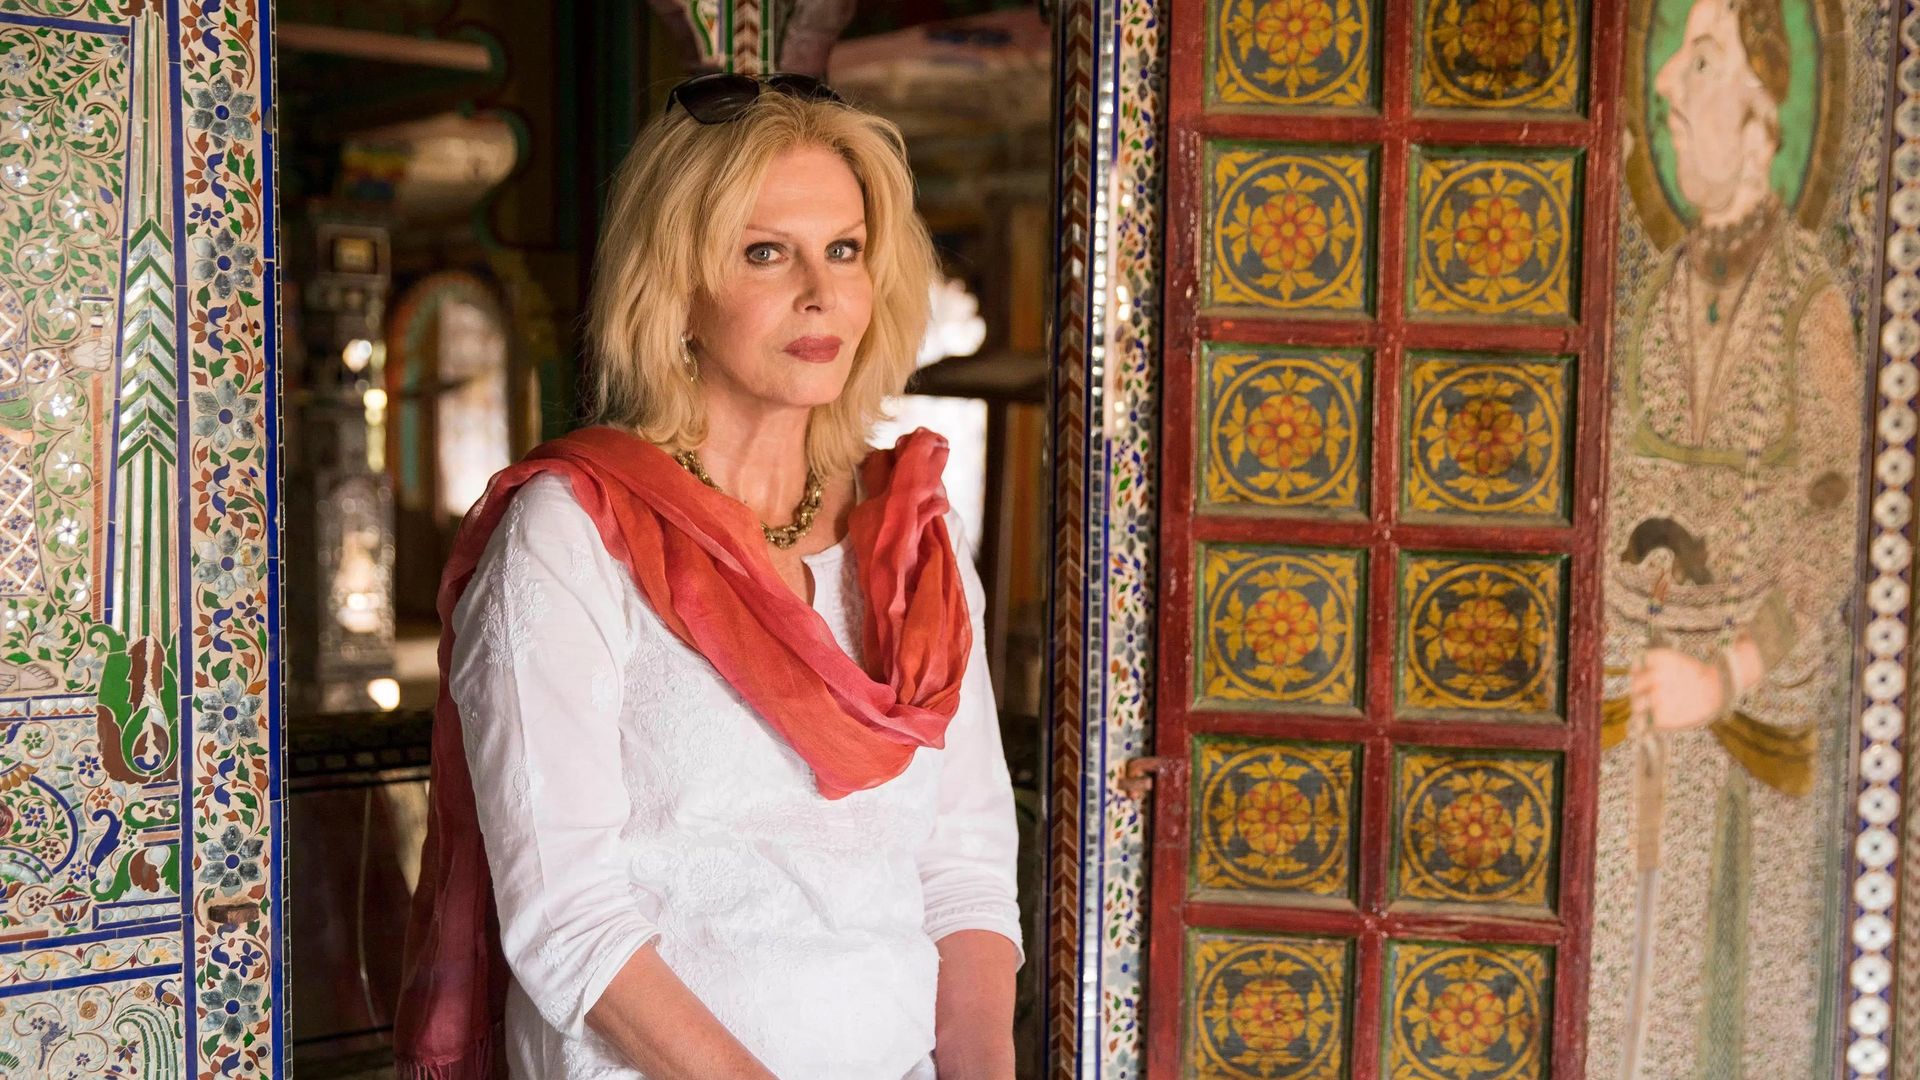 Joanna Lumley's India background